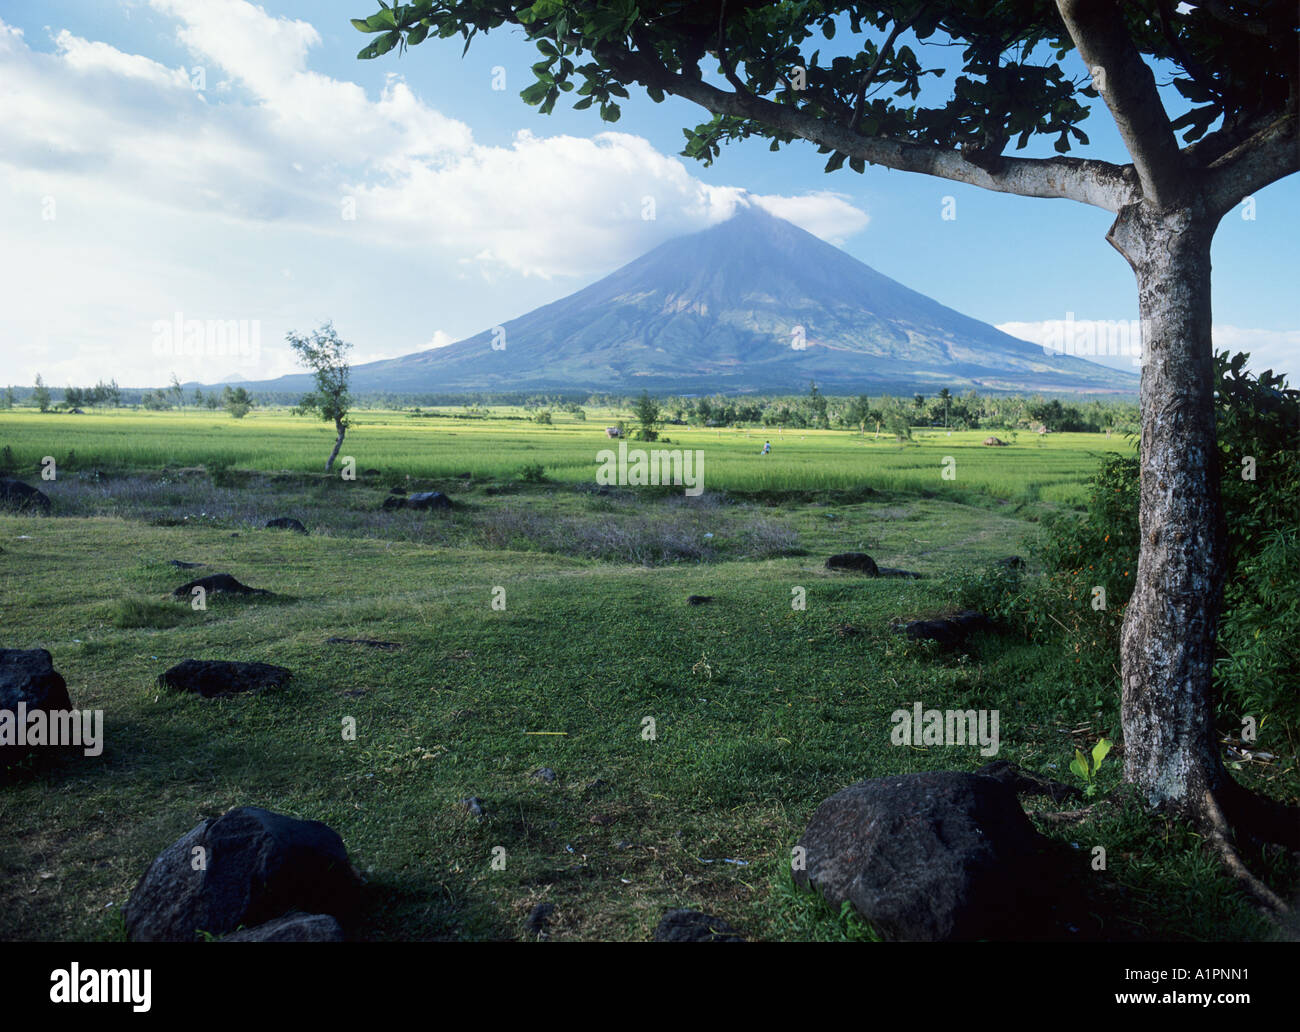 Mayon Volcano, Bicol, Philippines. Stock Photo